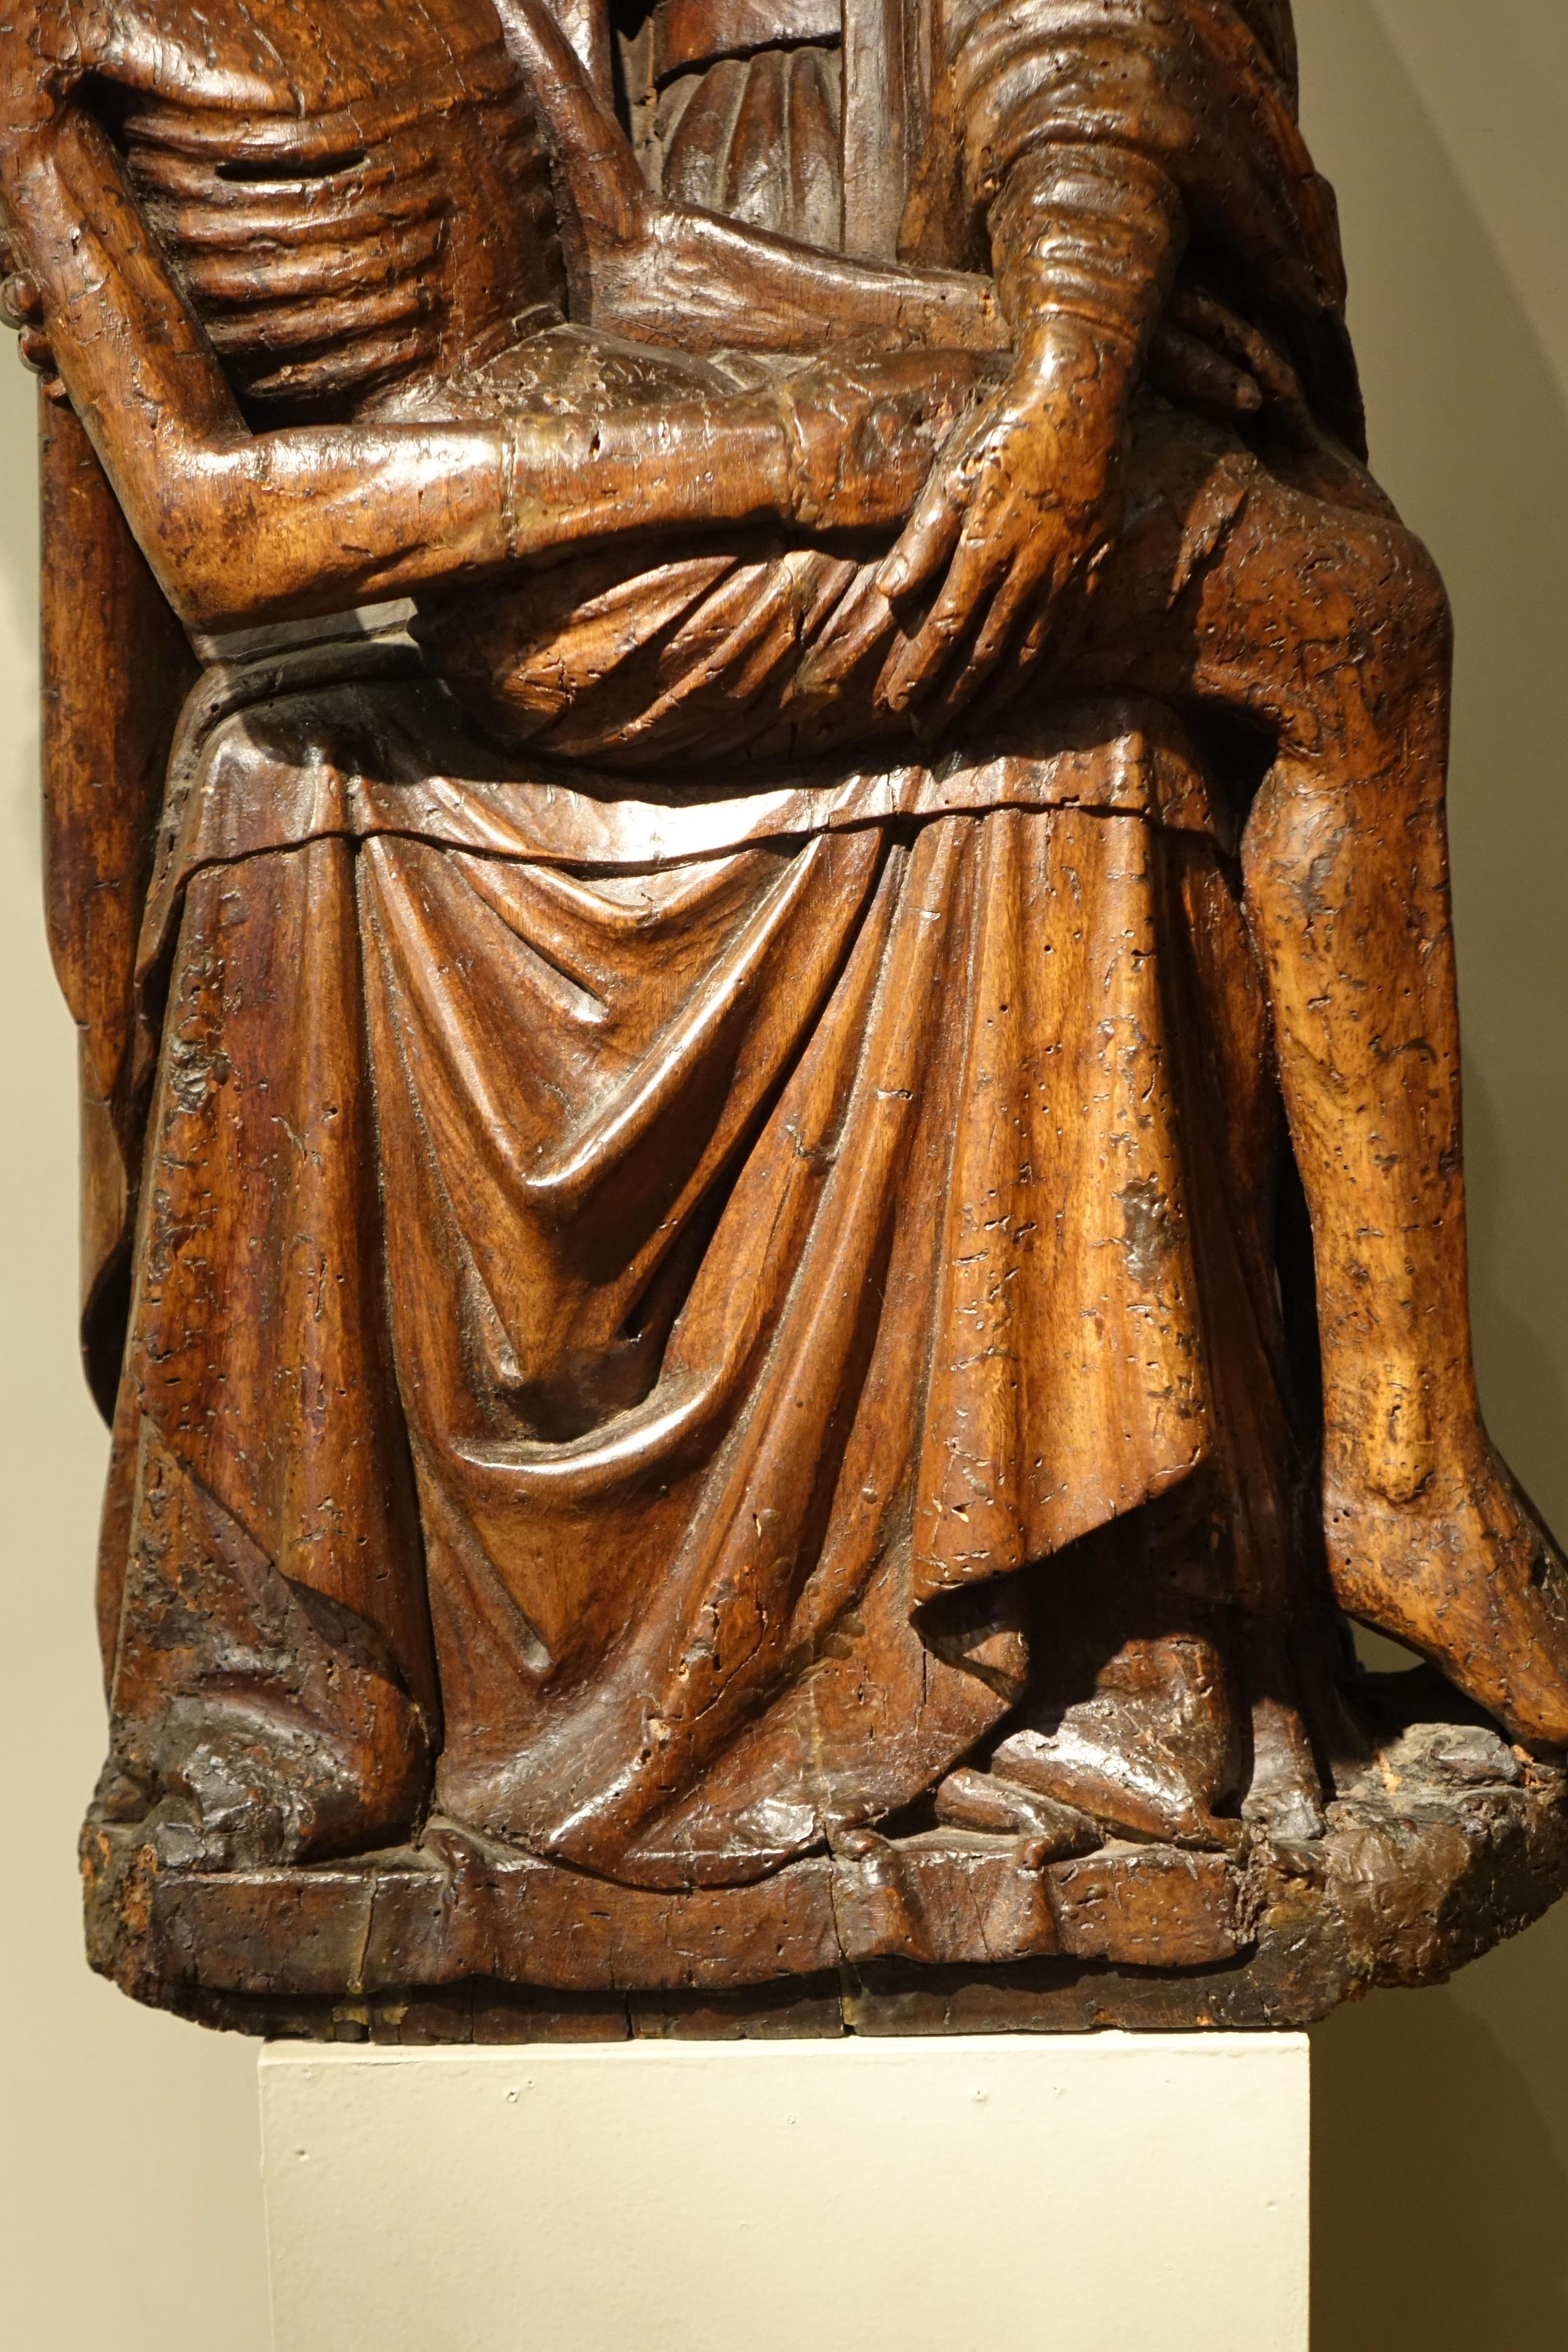 Hand-Carved Pieta in oak wood, Germany, circa 1500